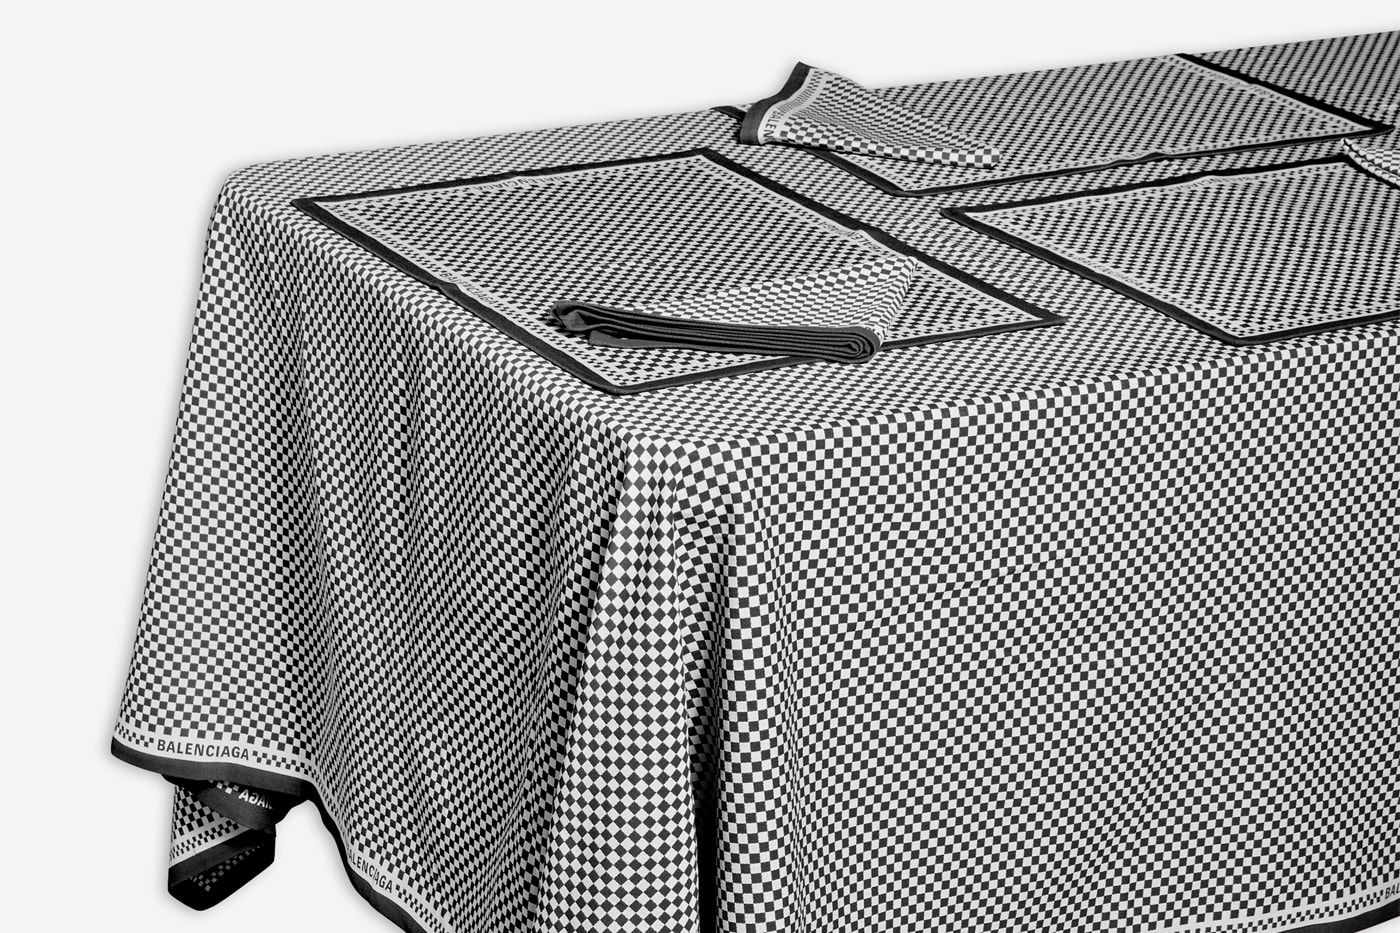 Balenciaga bistro table set tablecloth place mat napkin jacquard made in italy release info